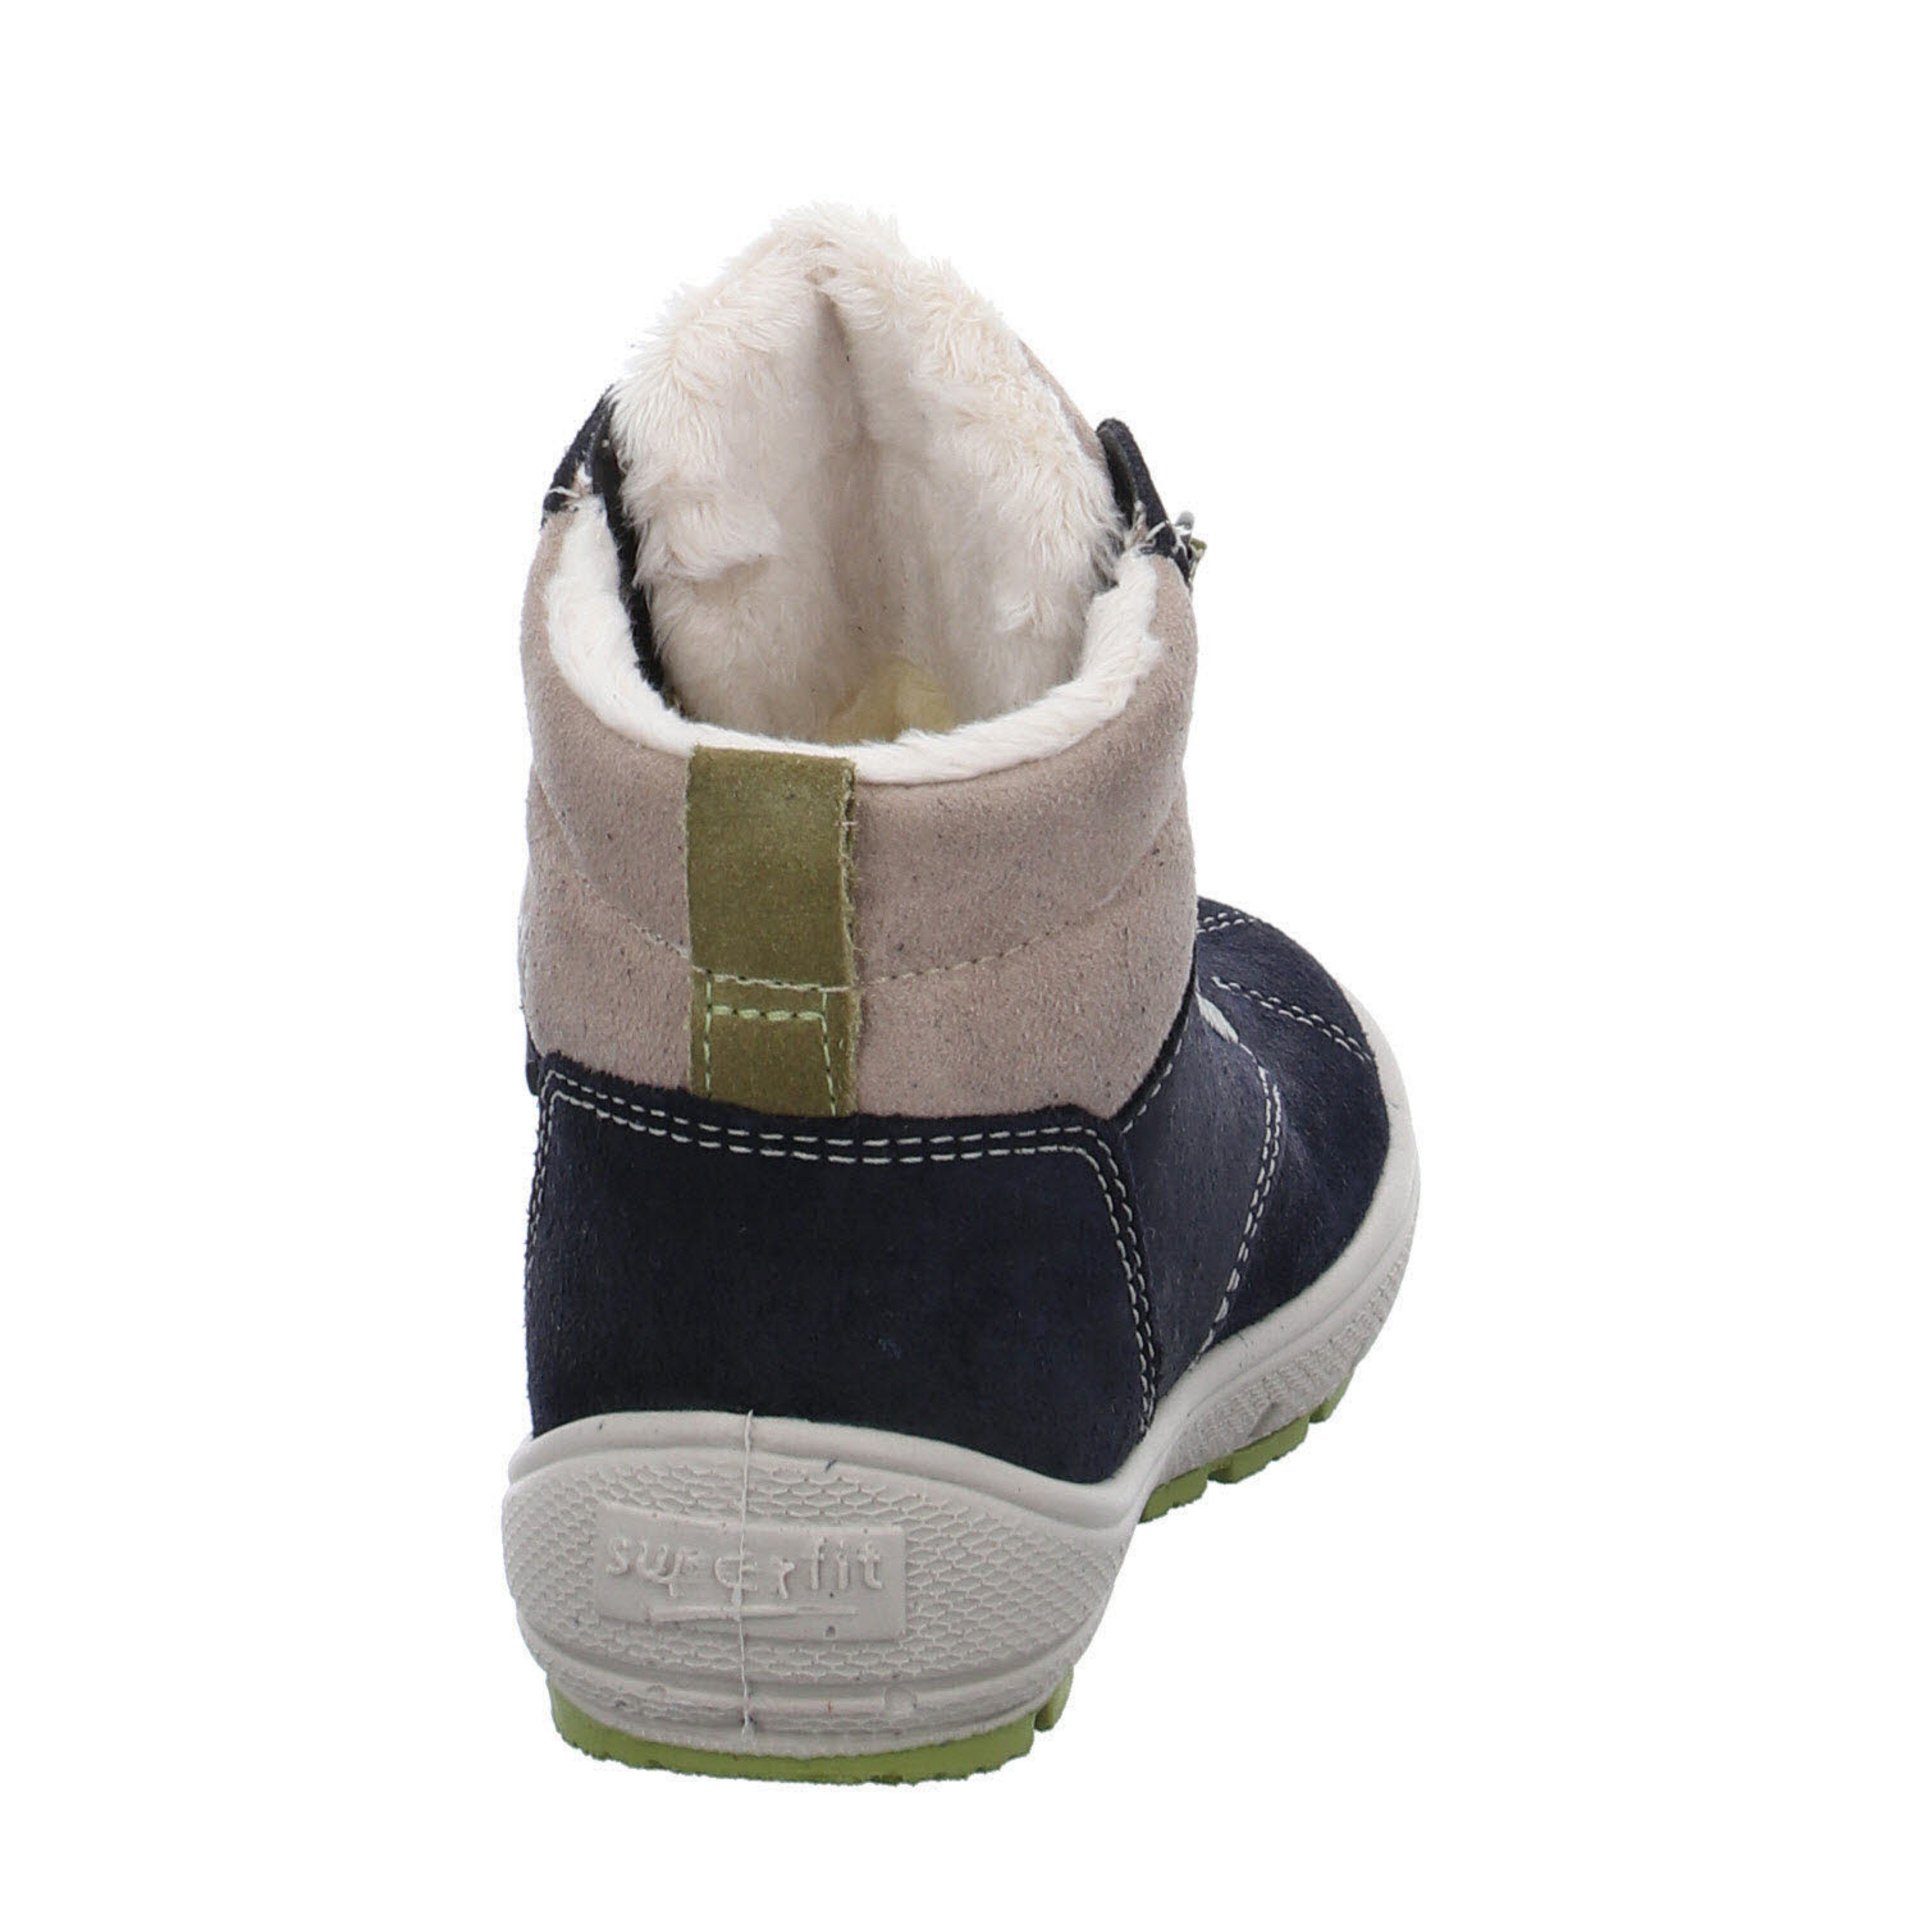 Lauflernschuhe Krabbelschuhe Boots Leder-/Textilkombination Baby Lauflernschuh Groovy Superfit